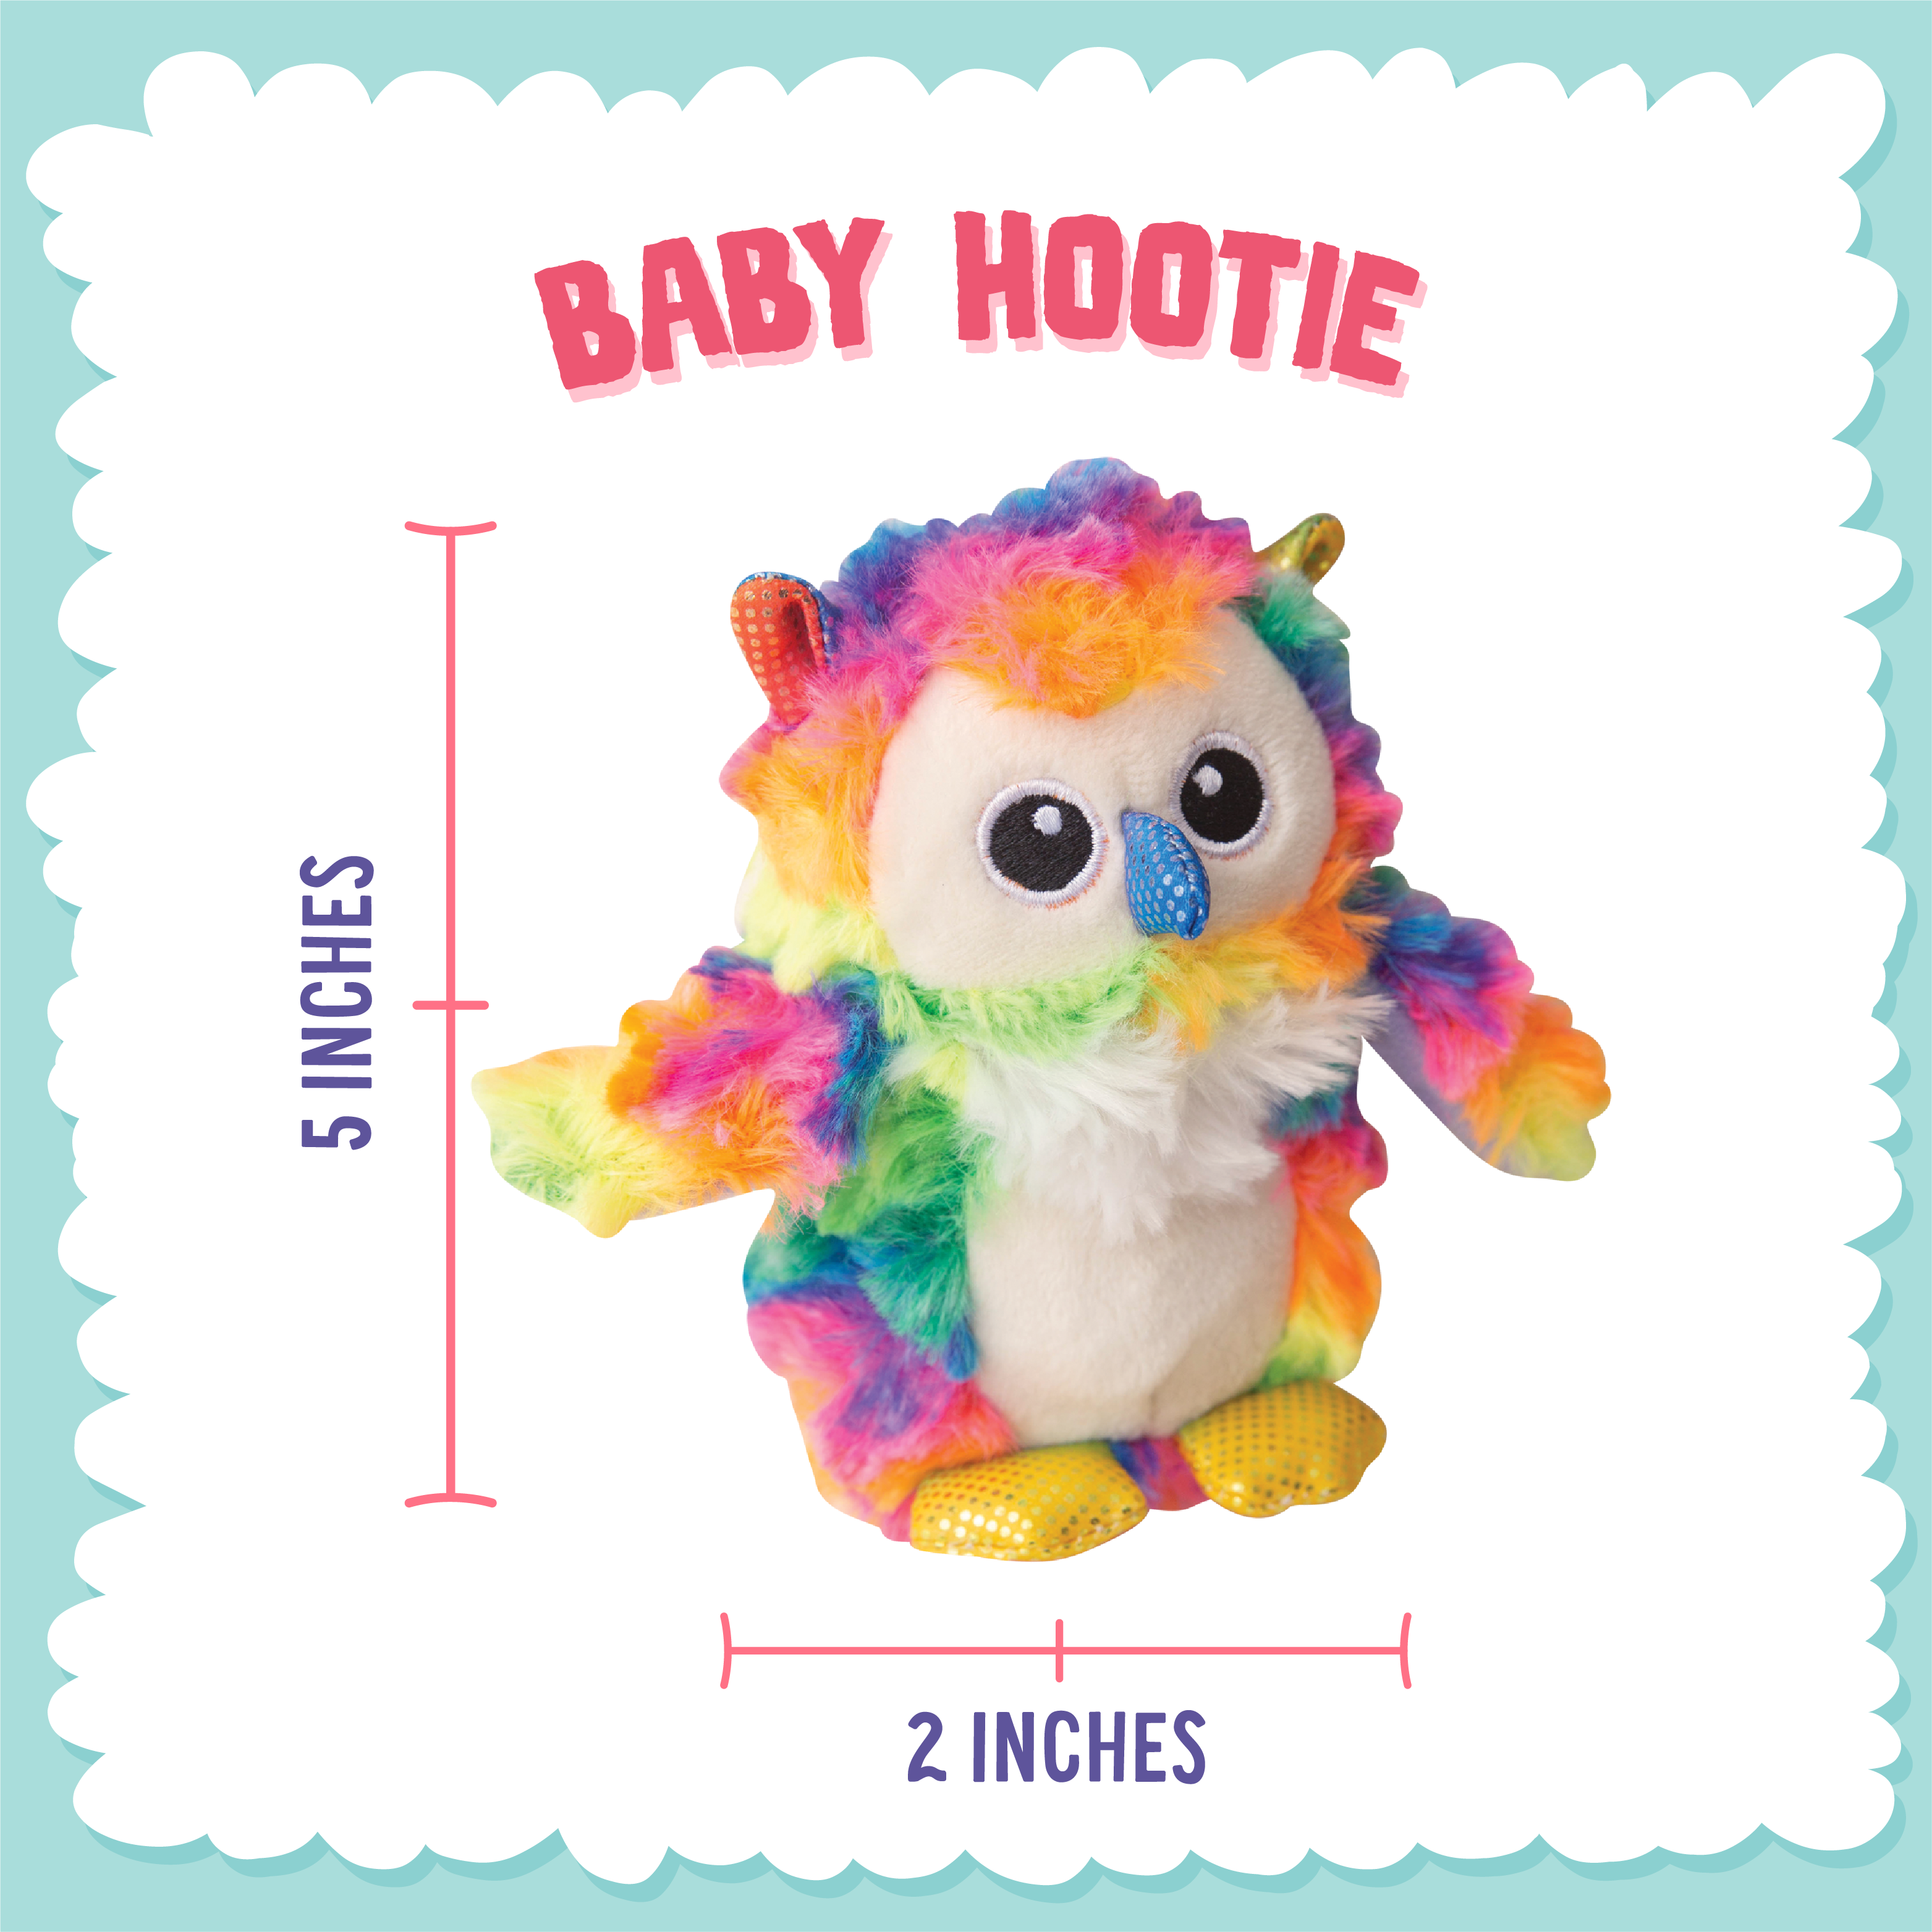 Baby Hootie the Owl